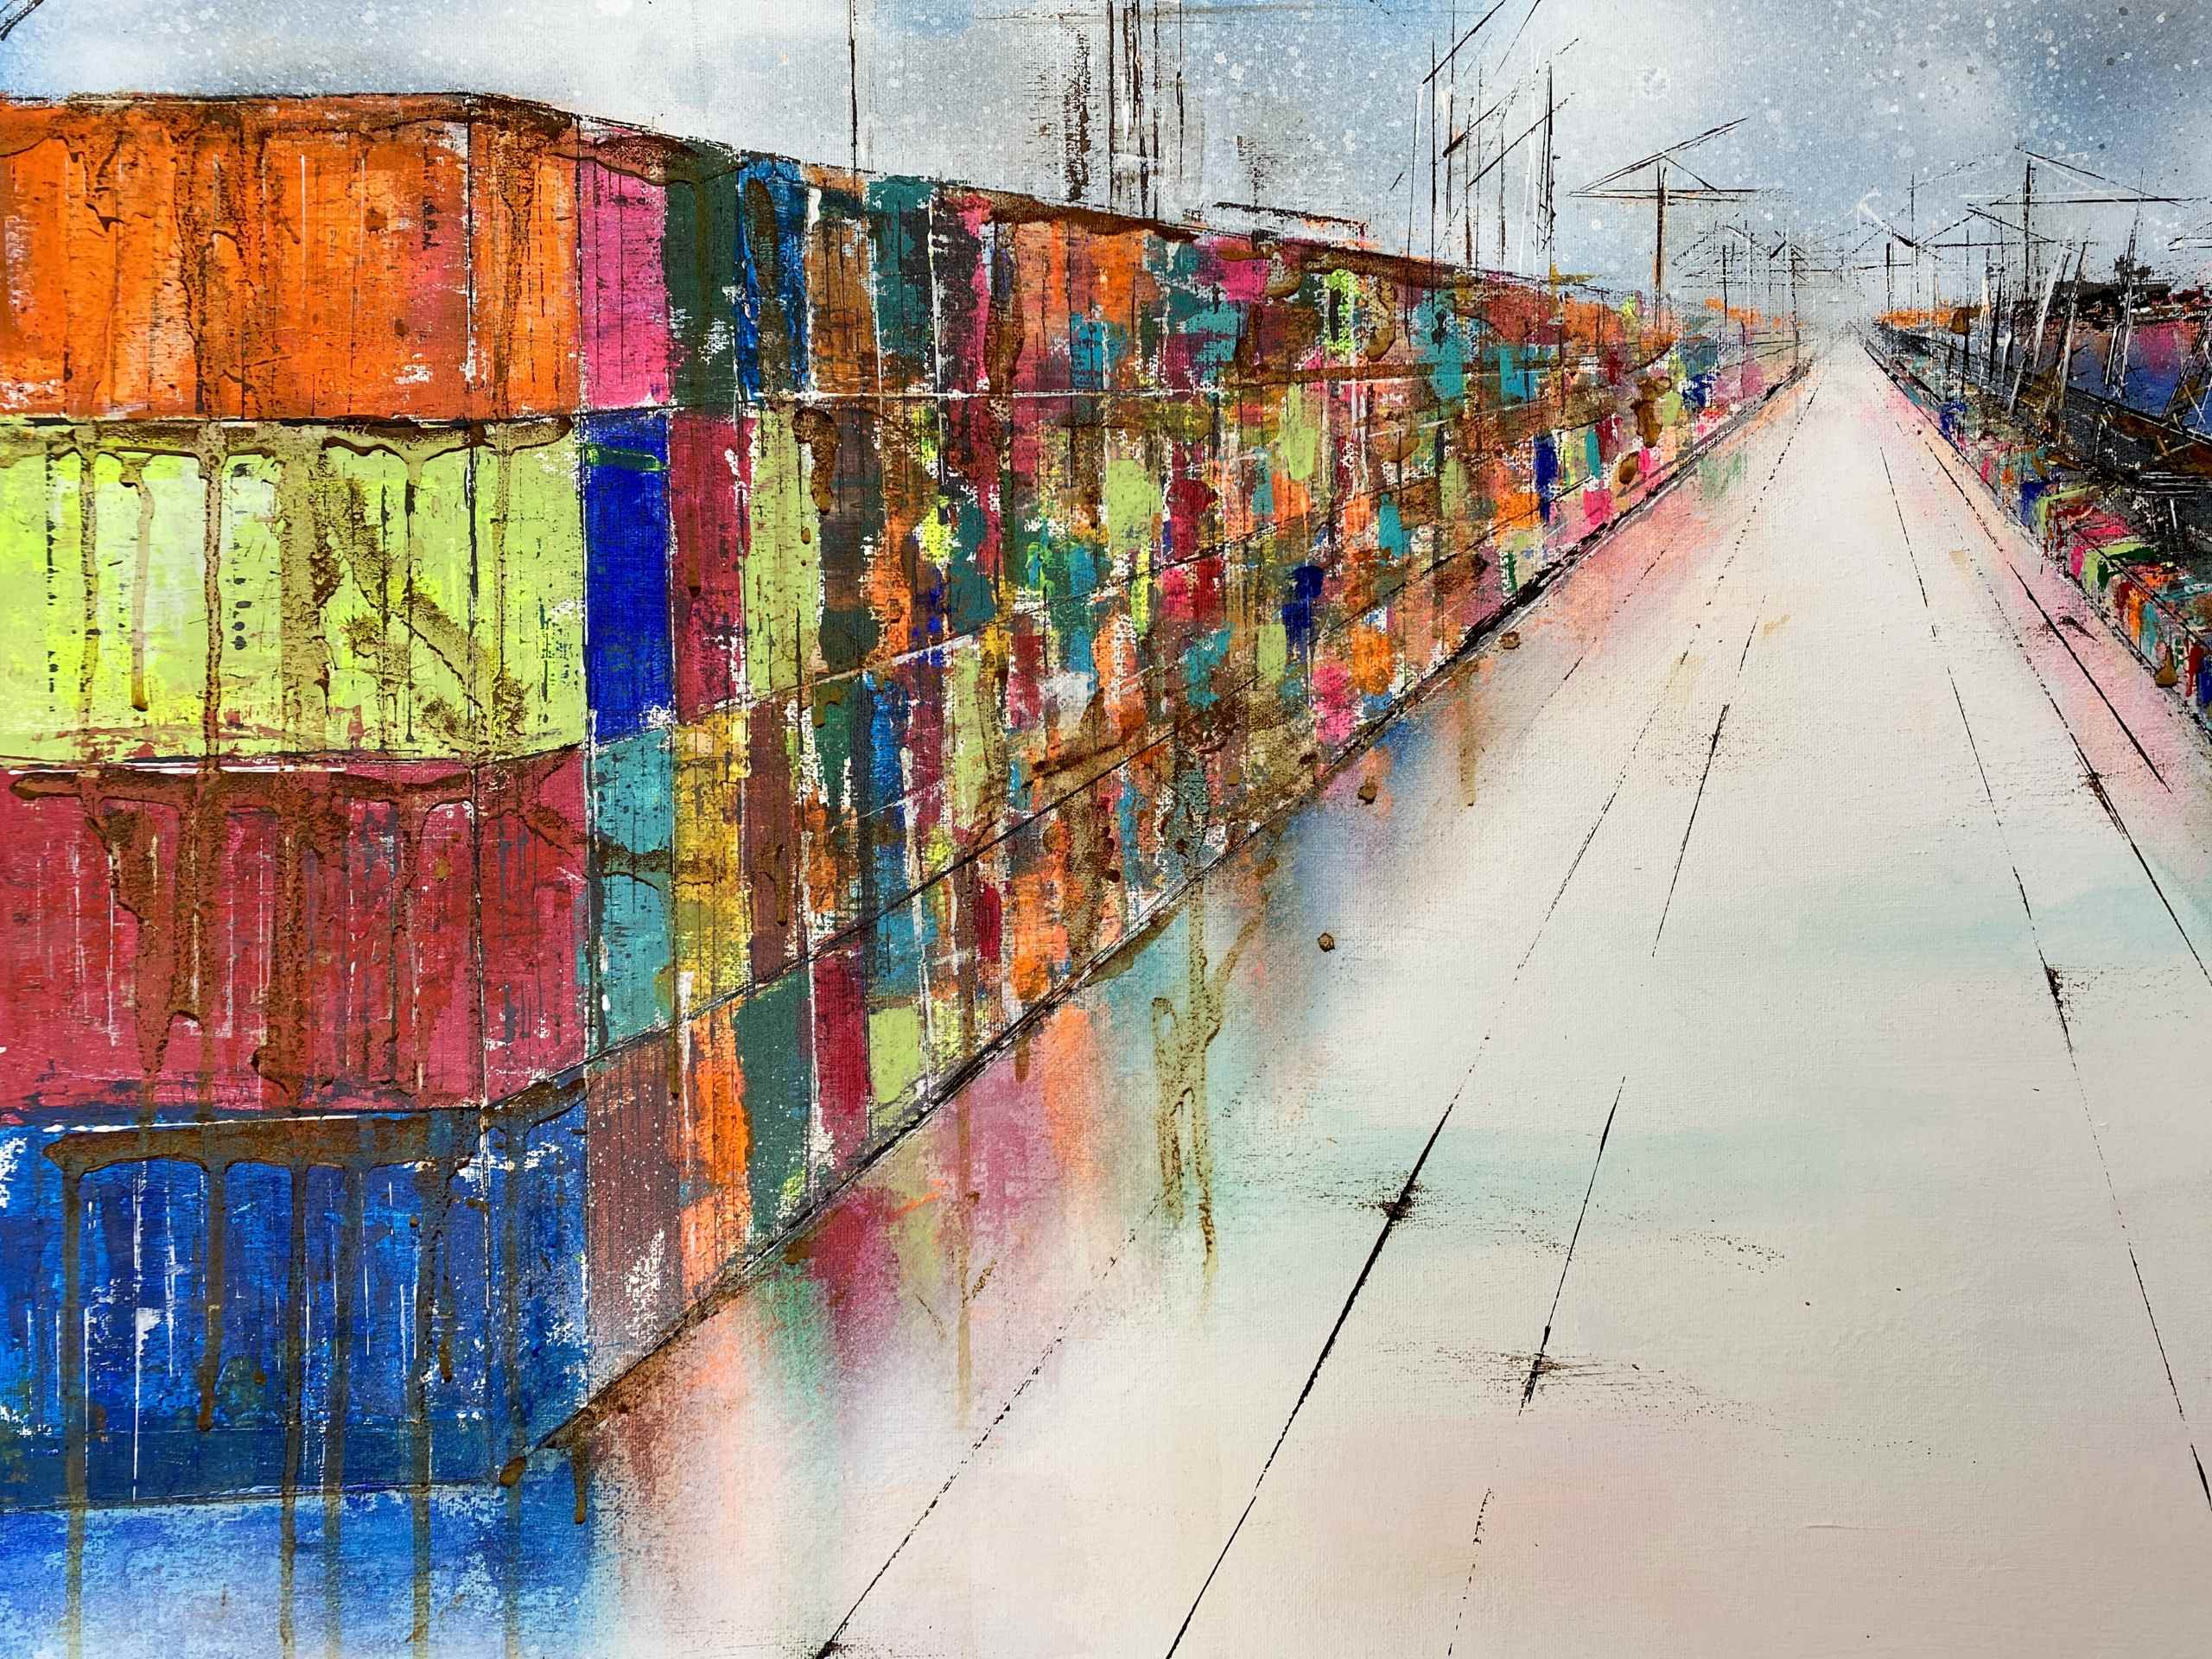 Detail of artwork "Dock No 7" by Nina Groth